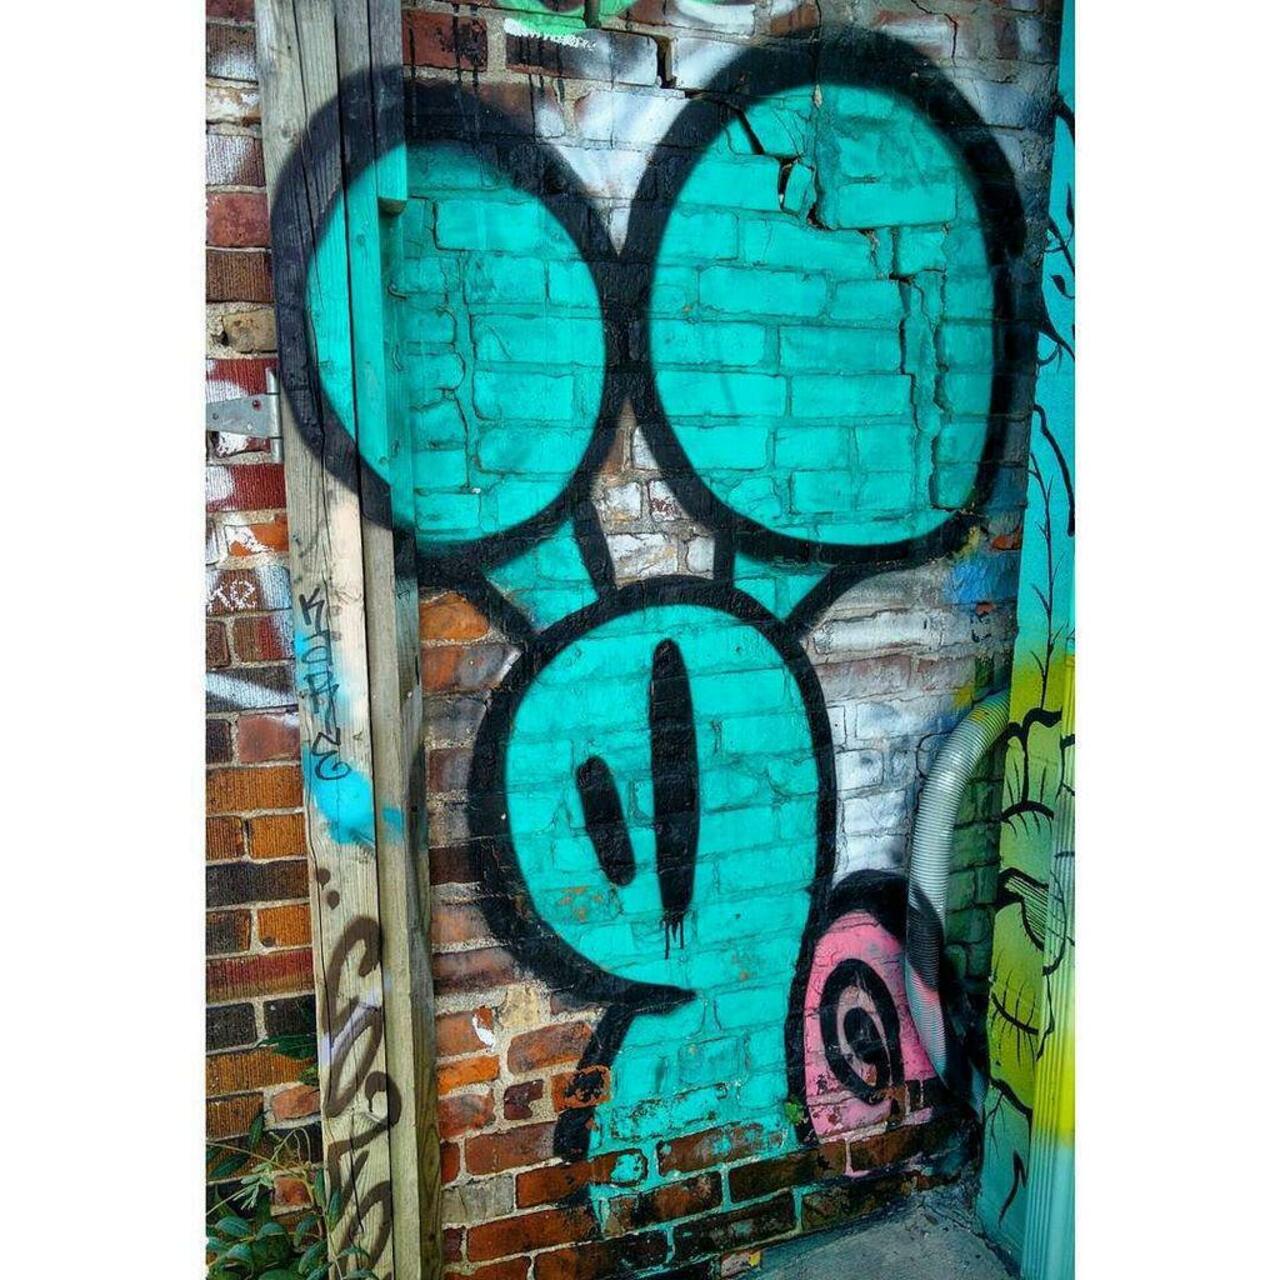 RT @artpushr: via #tdotstreetart "http://ift.tt/1VhMlDH" #graffiti #streetart http://t.co/Pagvjb6prJ